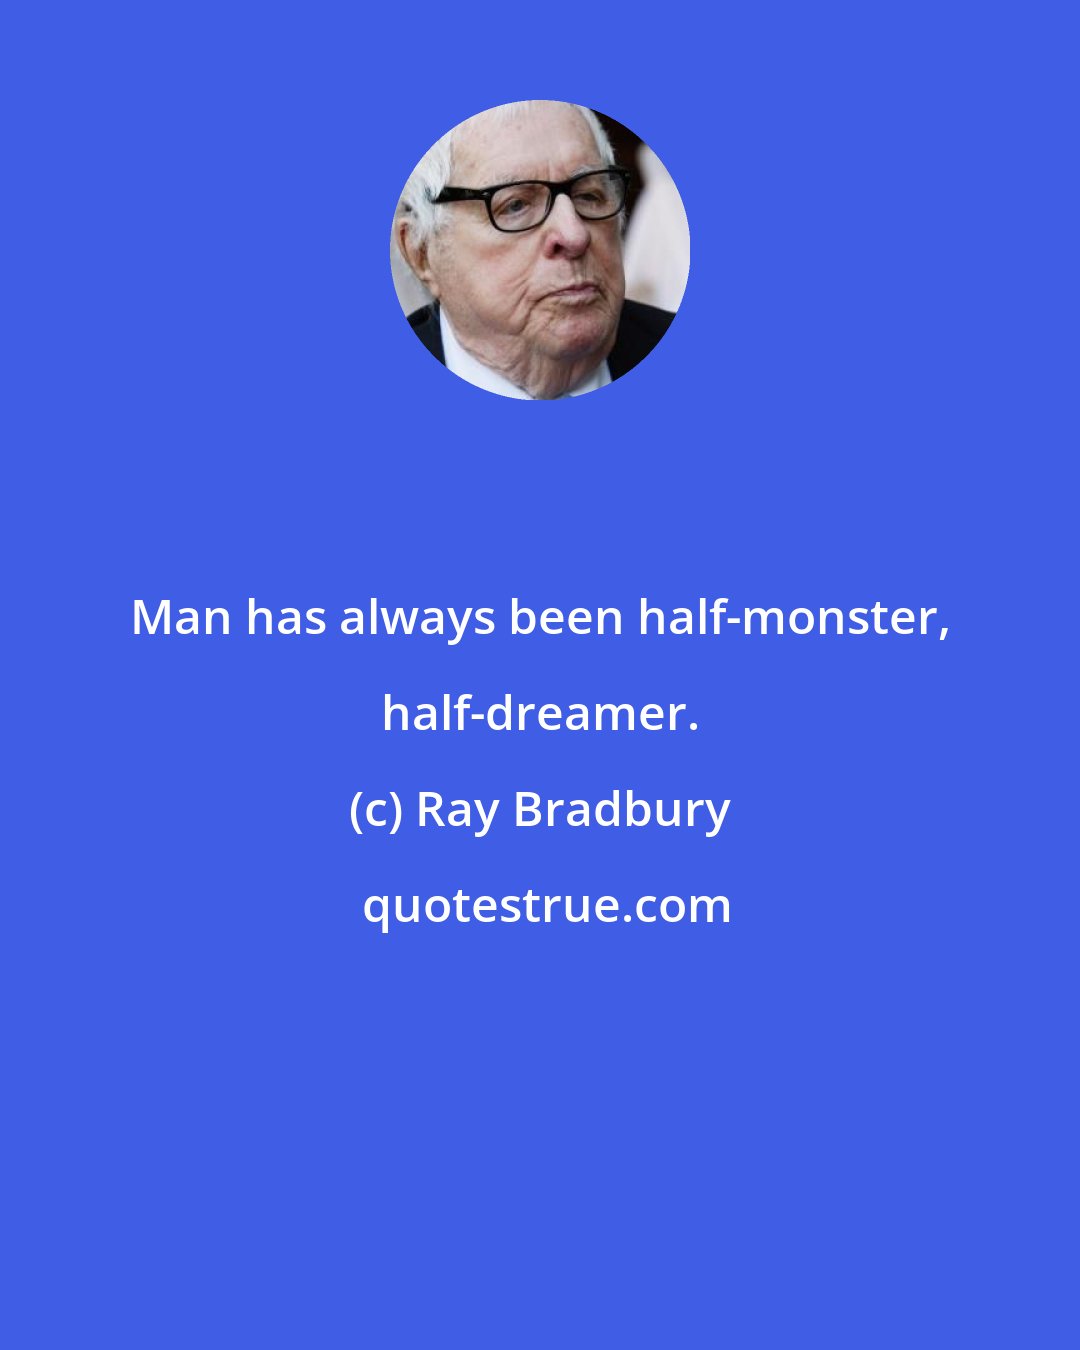 Ray Bradbury: Man has always been half-monster, half-dreamer.